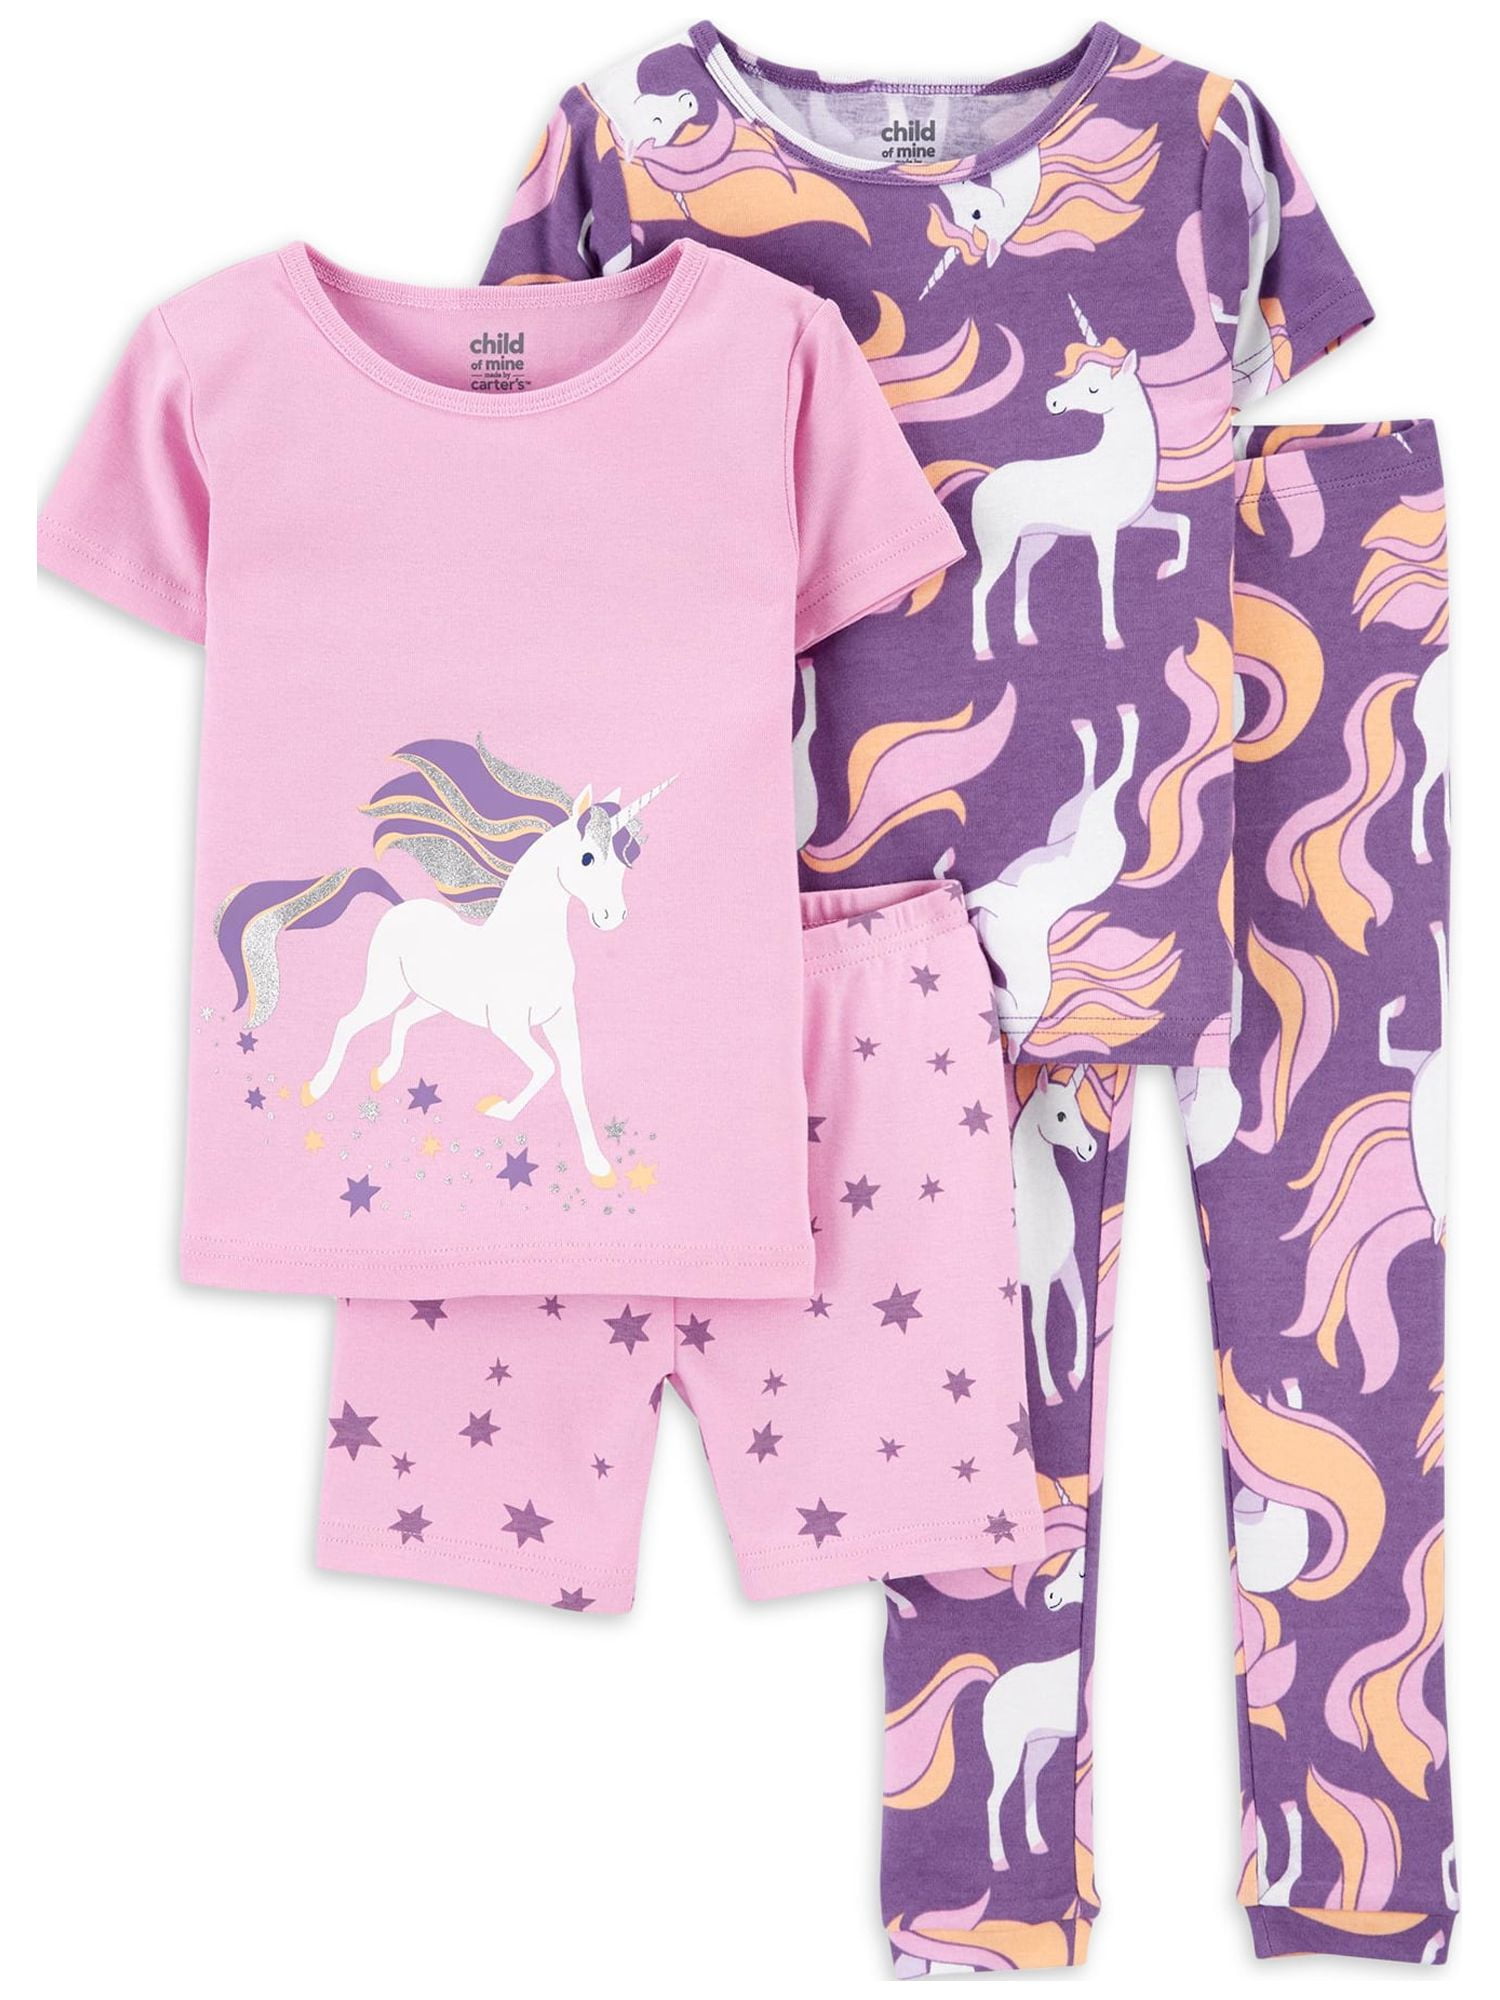 Carters Simple Joys Toddler Girls Pajamas Sz 4T Rainbows Owls Unicorns New